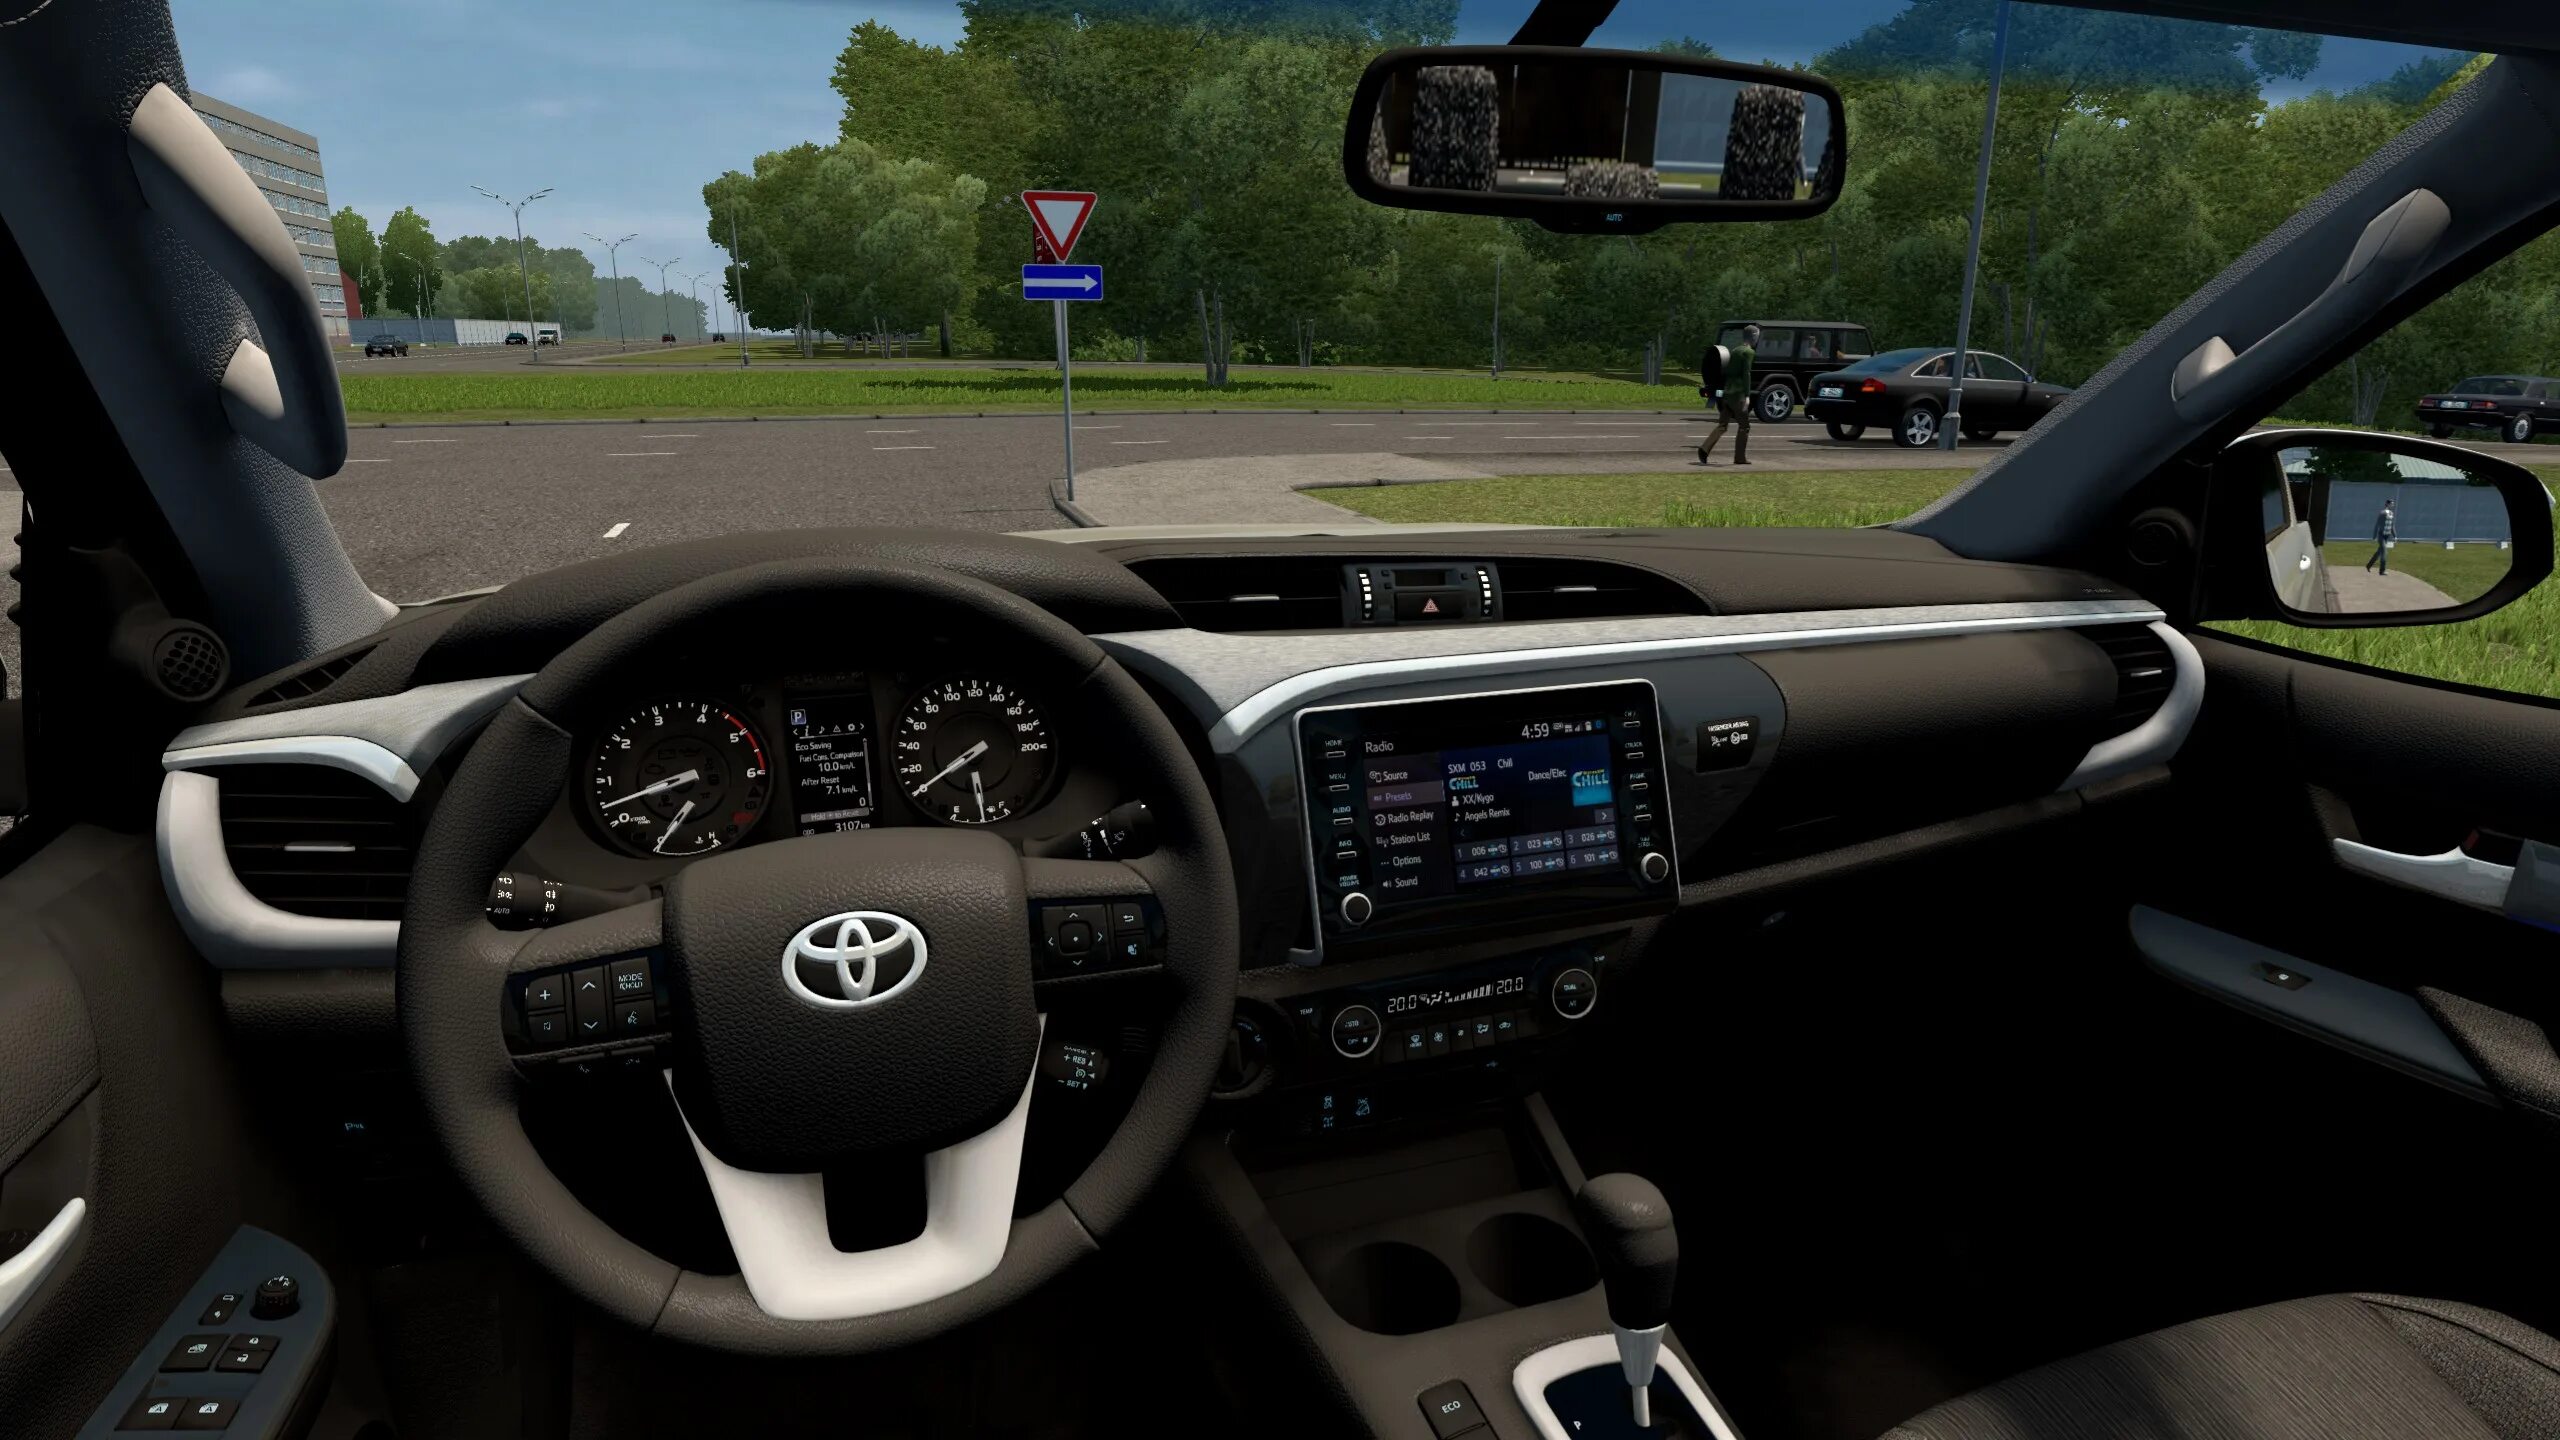 Toyota Hilux City car Driving 1.5.9.2. Тойота Хайлюкс 2016 Сити кар драйвинг. City car Driving моды Highlander 2022. City car Driving мод Toyota Highlander.